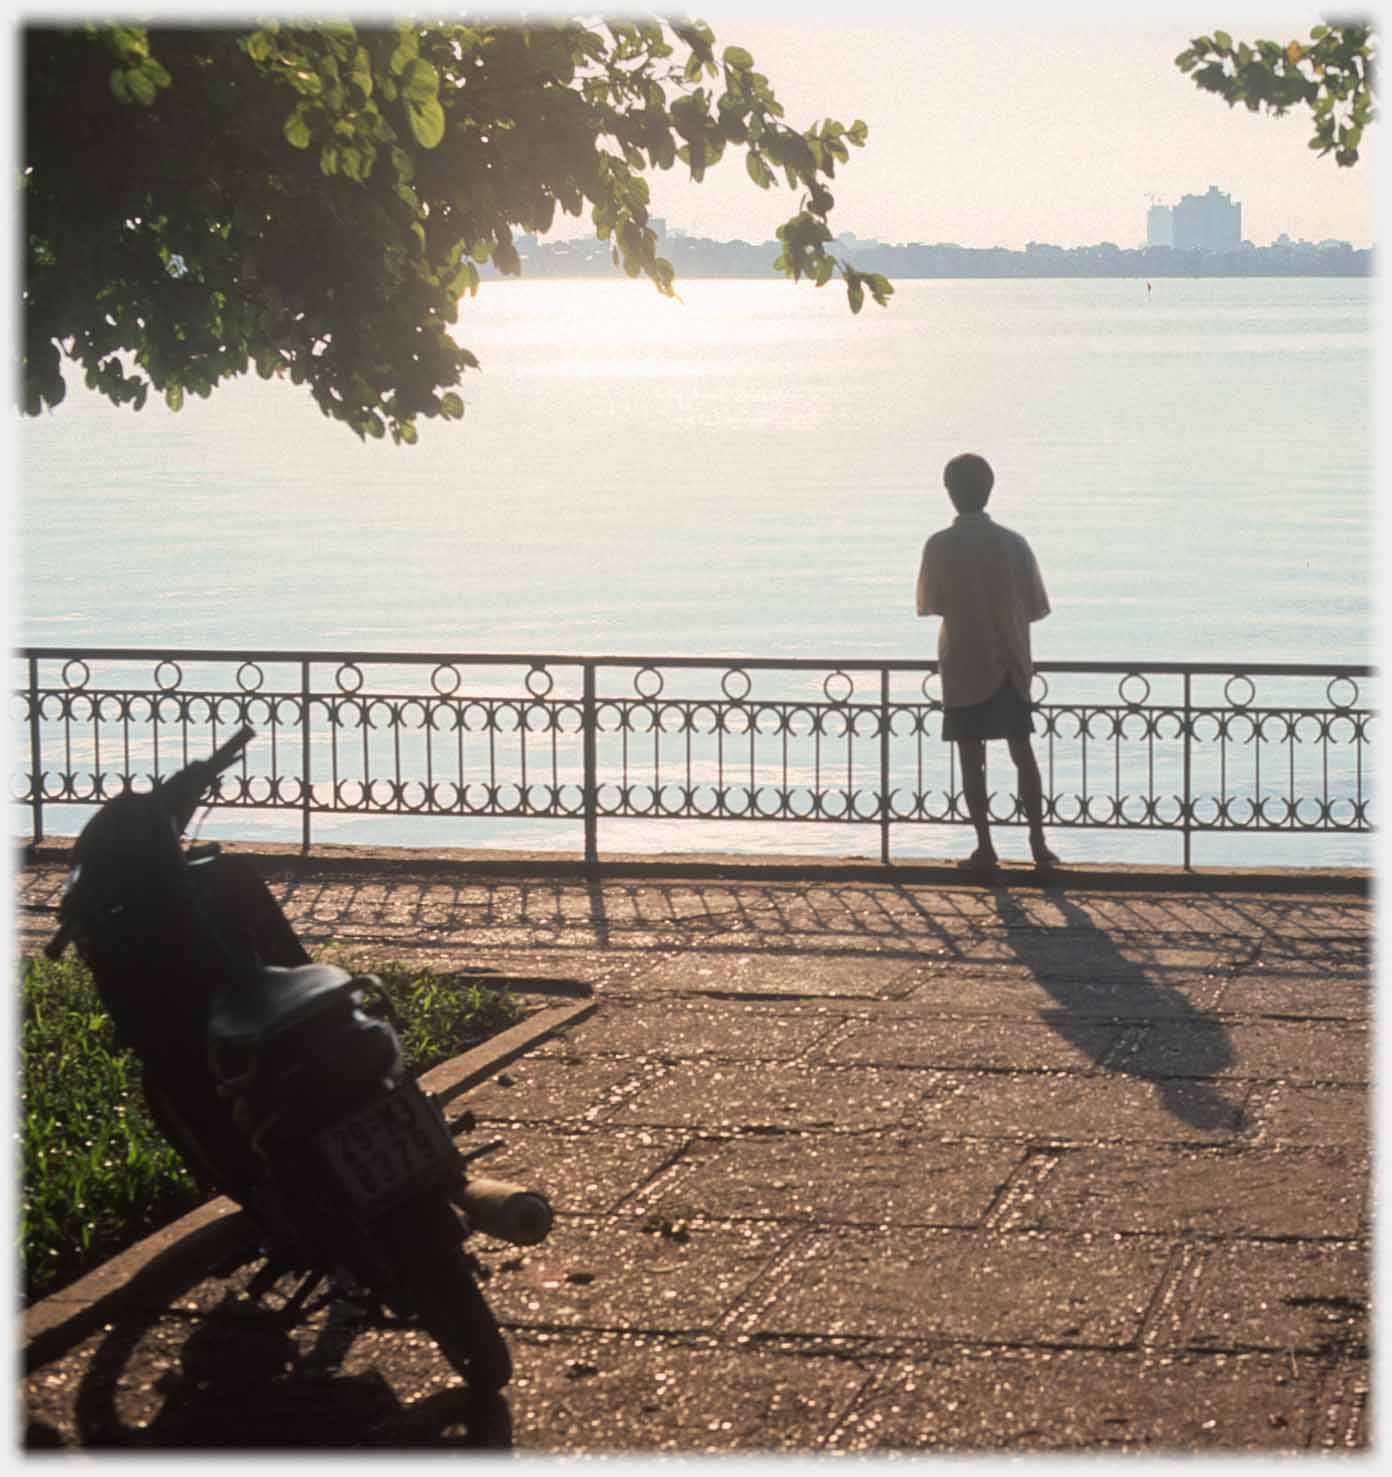 Man with long shadow by lake railings.